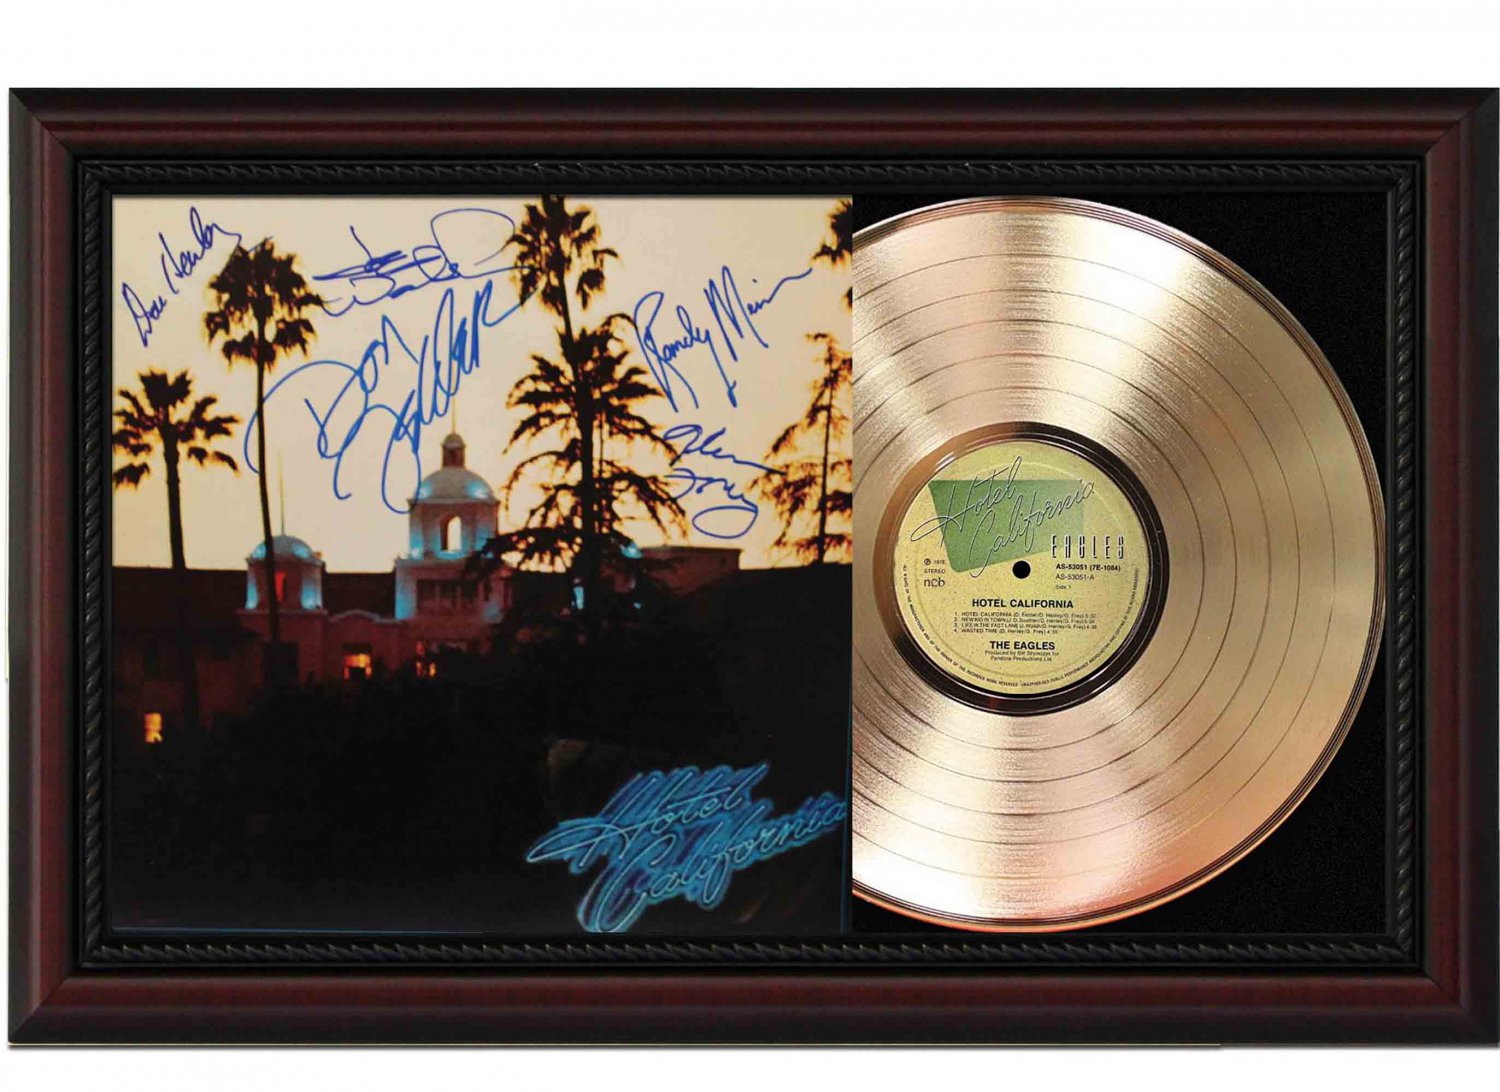 EAGLES "Hotel California" Framed Record Display.